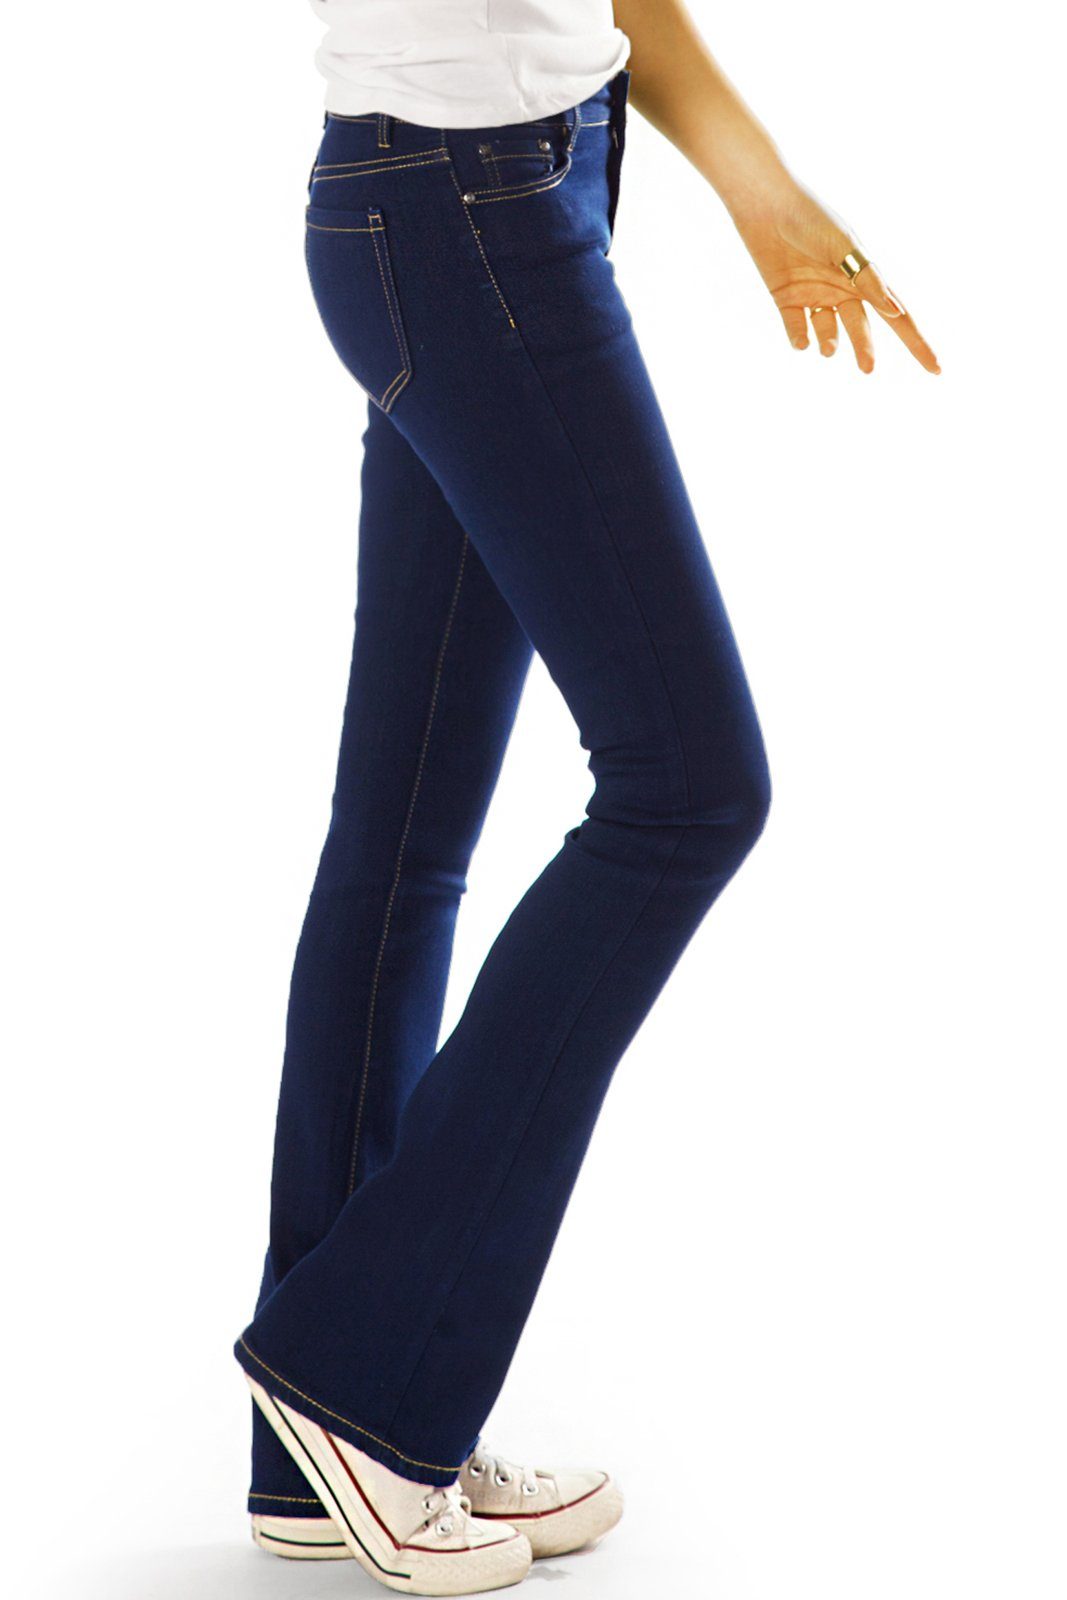 be styled - mit Bootcut-Jeans -j18g Stretch-Anteil, Damen Hüftjeans Bootcut schwarz 5-Pocket-Style Stretchjeans Jeanshose